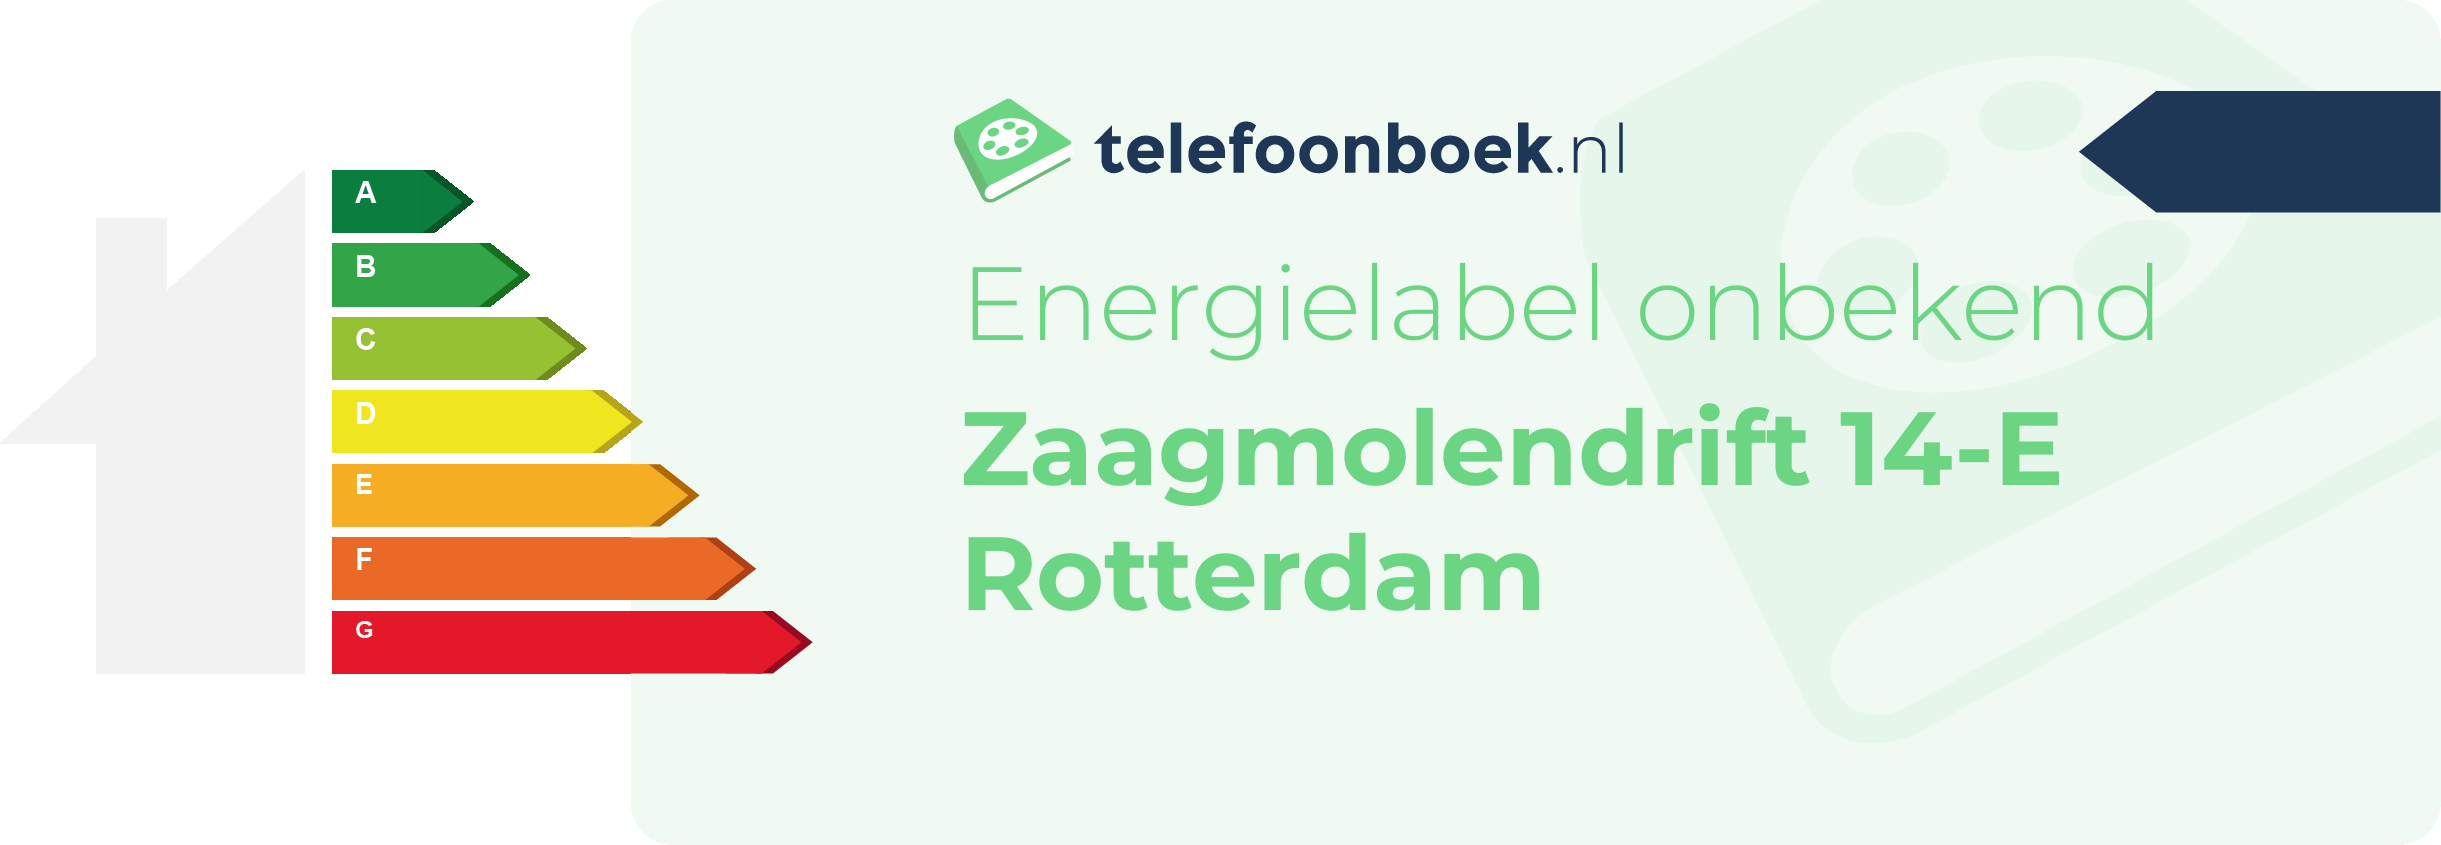 Energielabel Zaagmolendrift 14-E Rotterdam